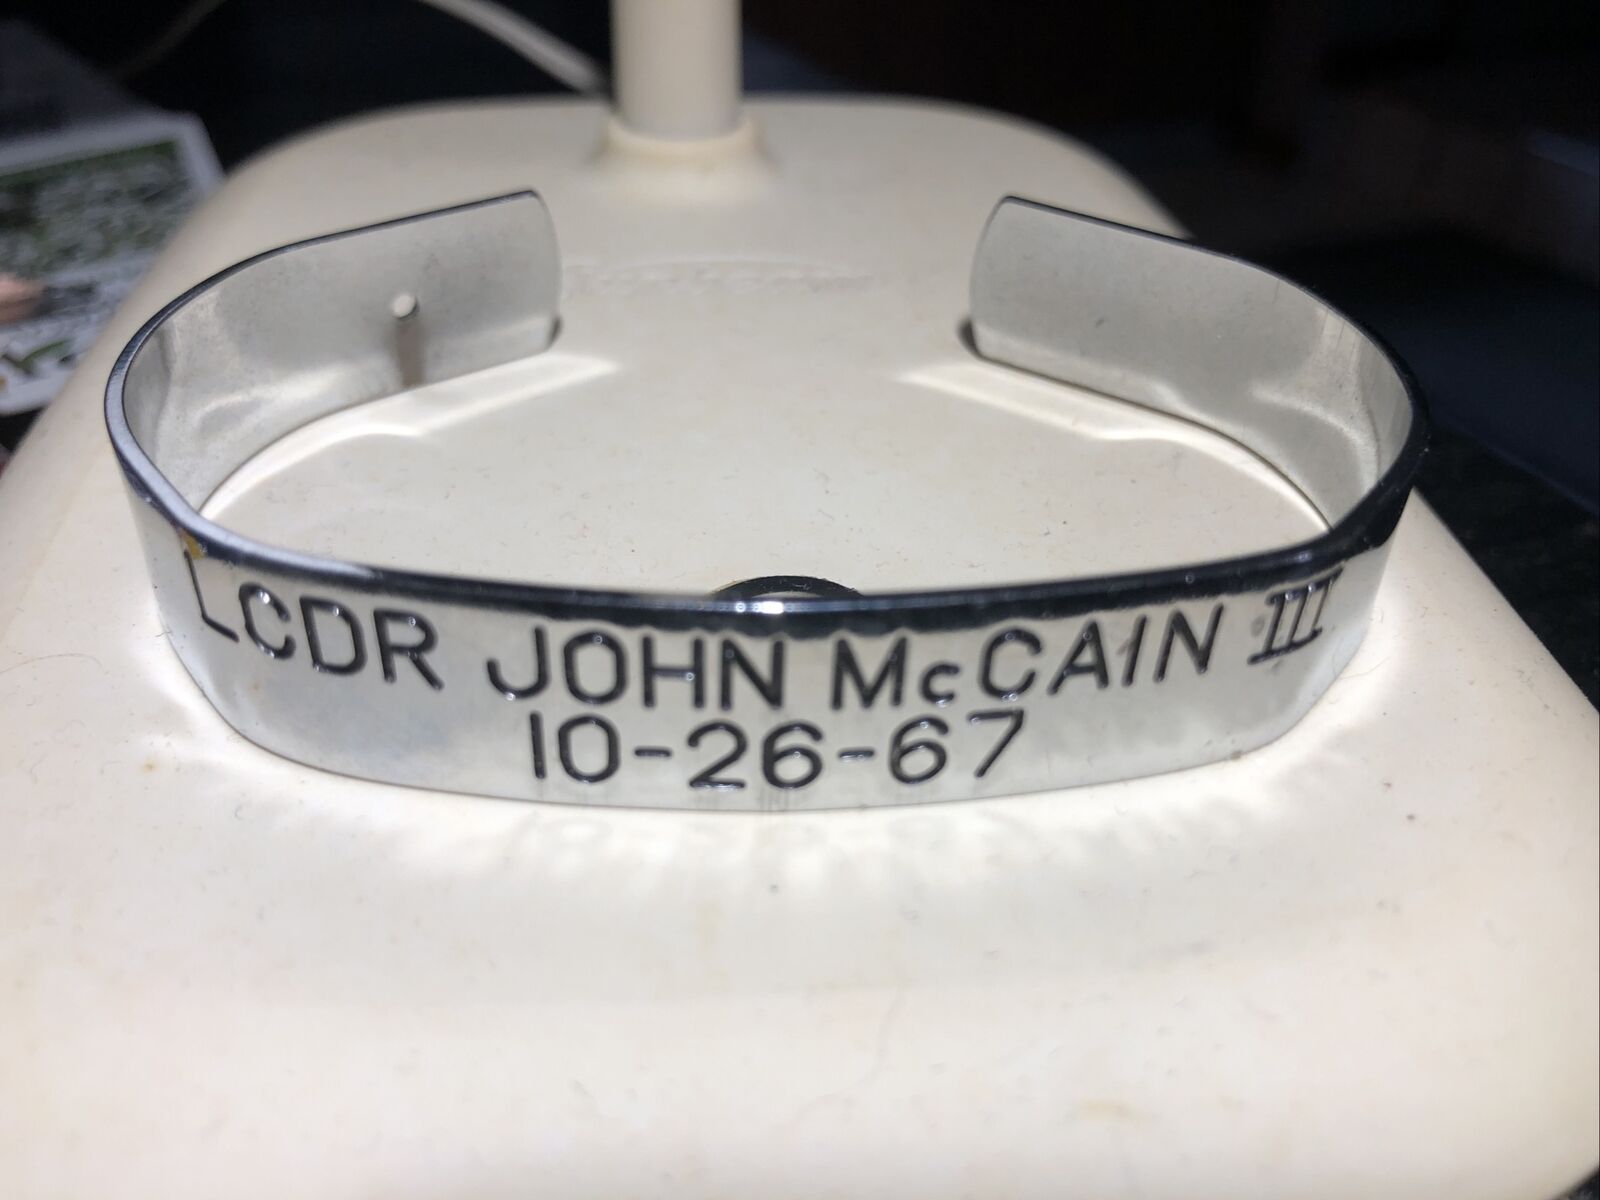 Vtg Original US Vietnam POW MIA Bracelet LCDR JOHN McCAIN III 10-26-67